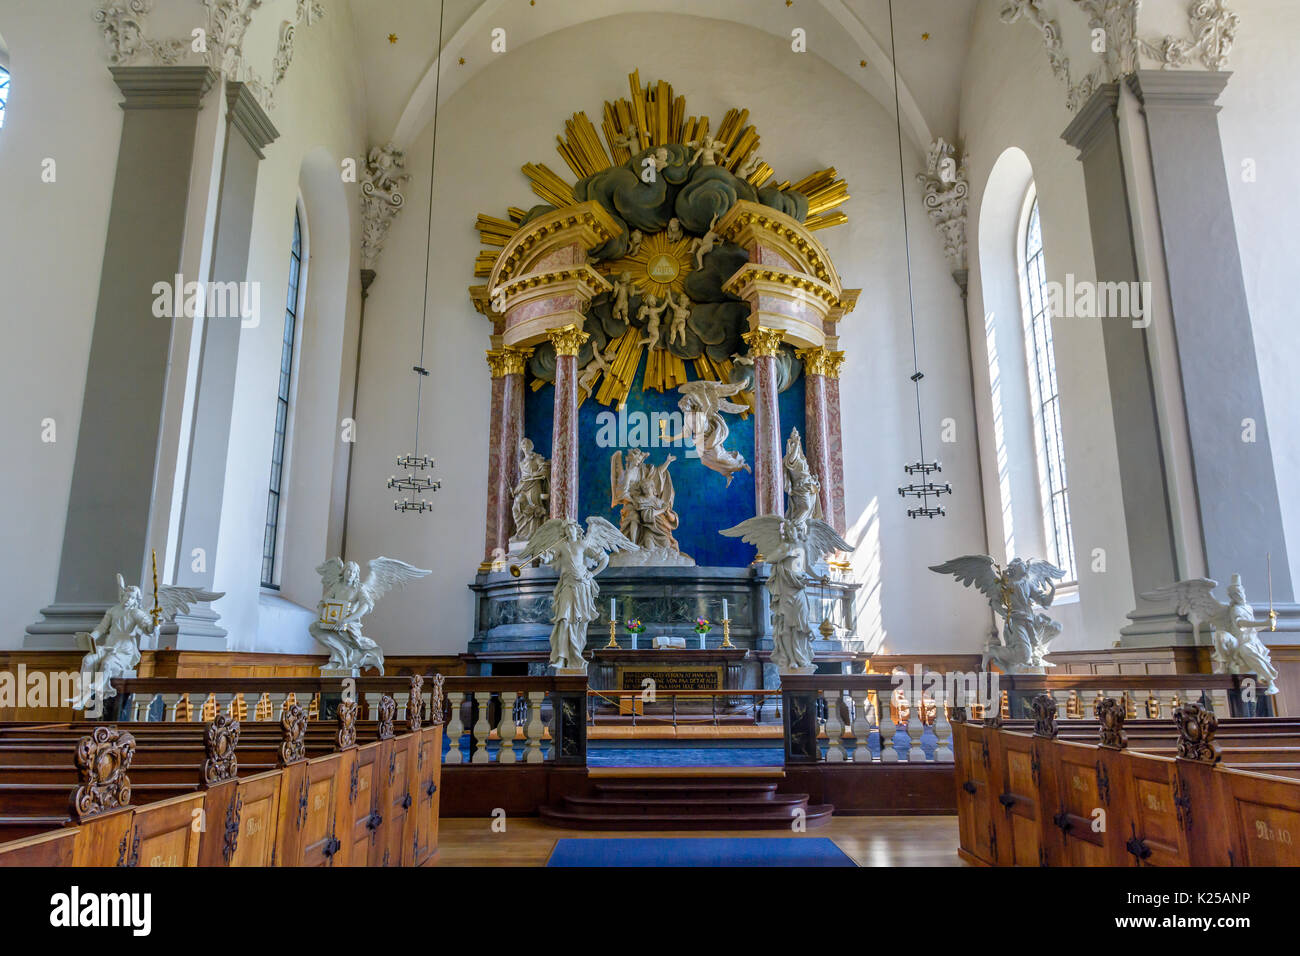 Das Innere der Kirche unseres Erlösers in Kopenhagen, Dänemark. Stockfoto